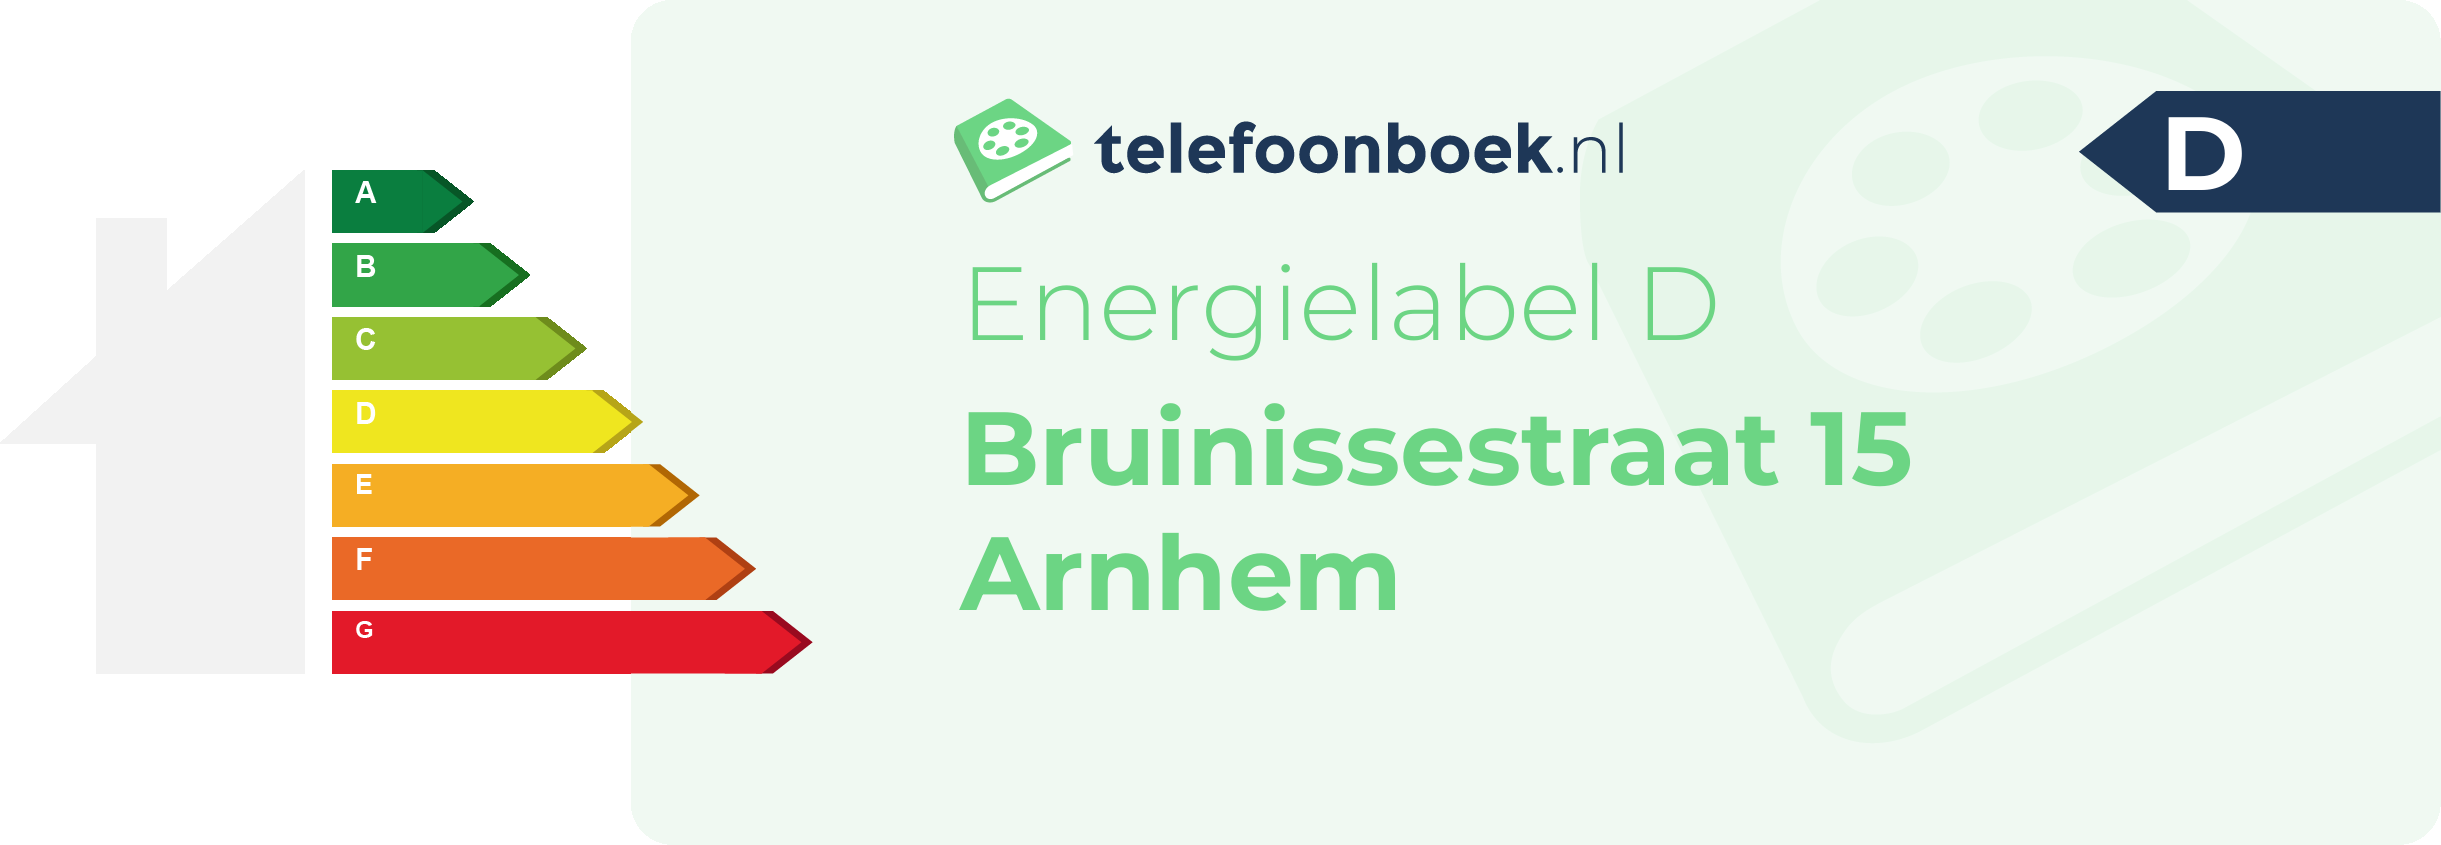 Energielabel Bruinissestraat 15 Arnhem